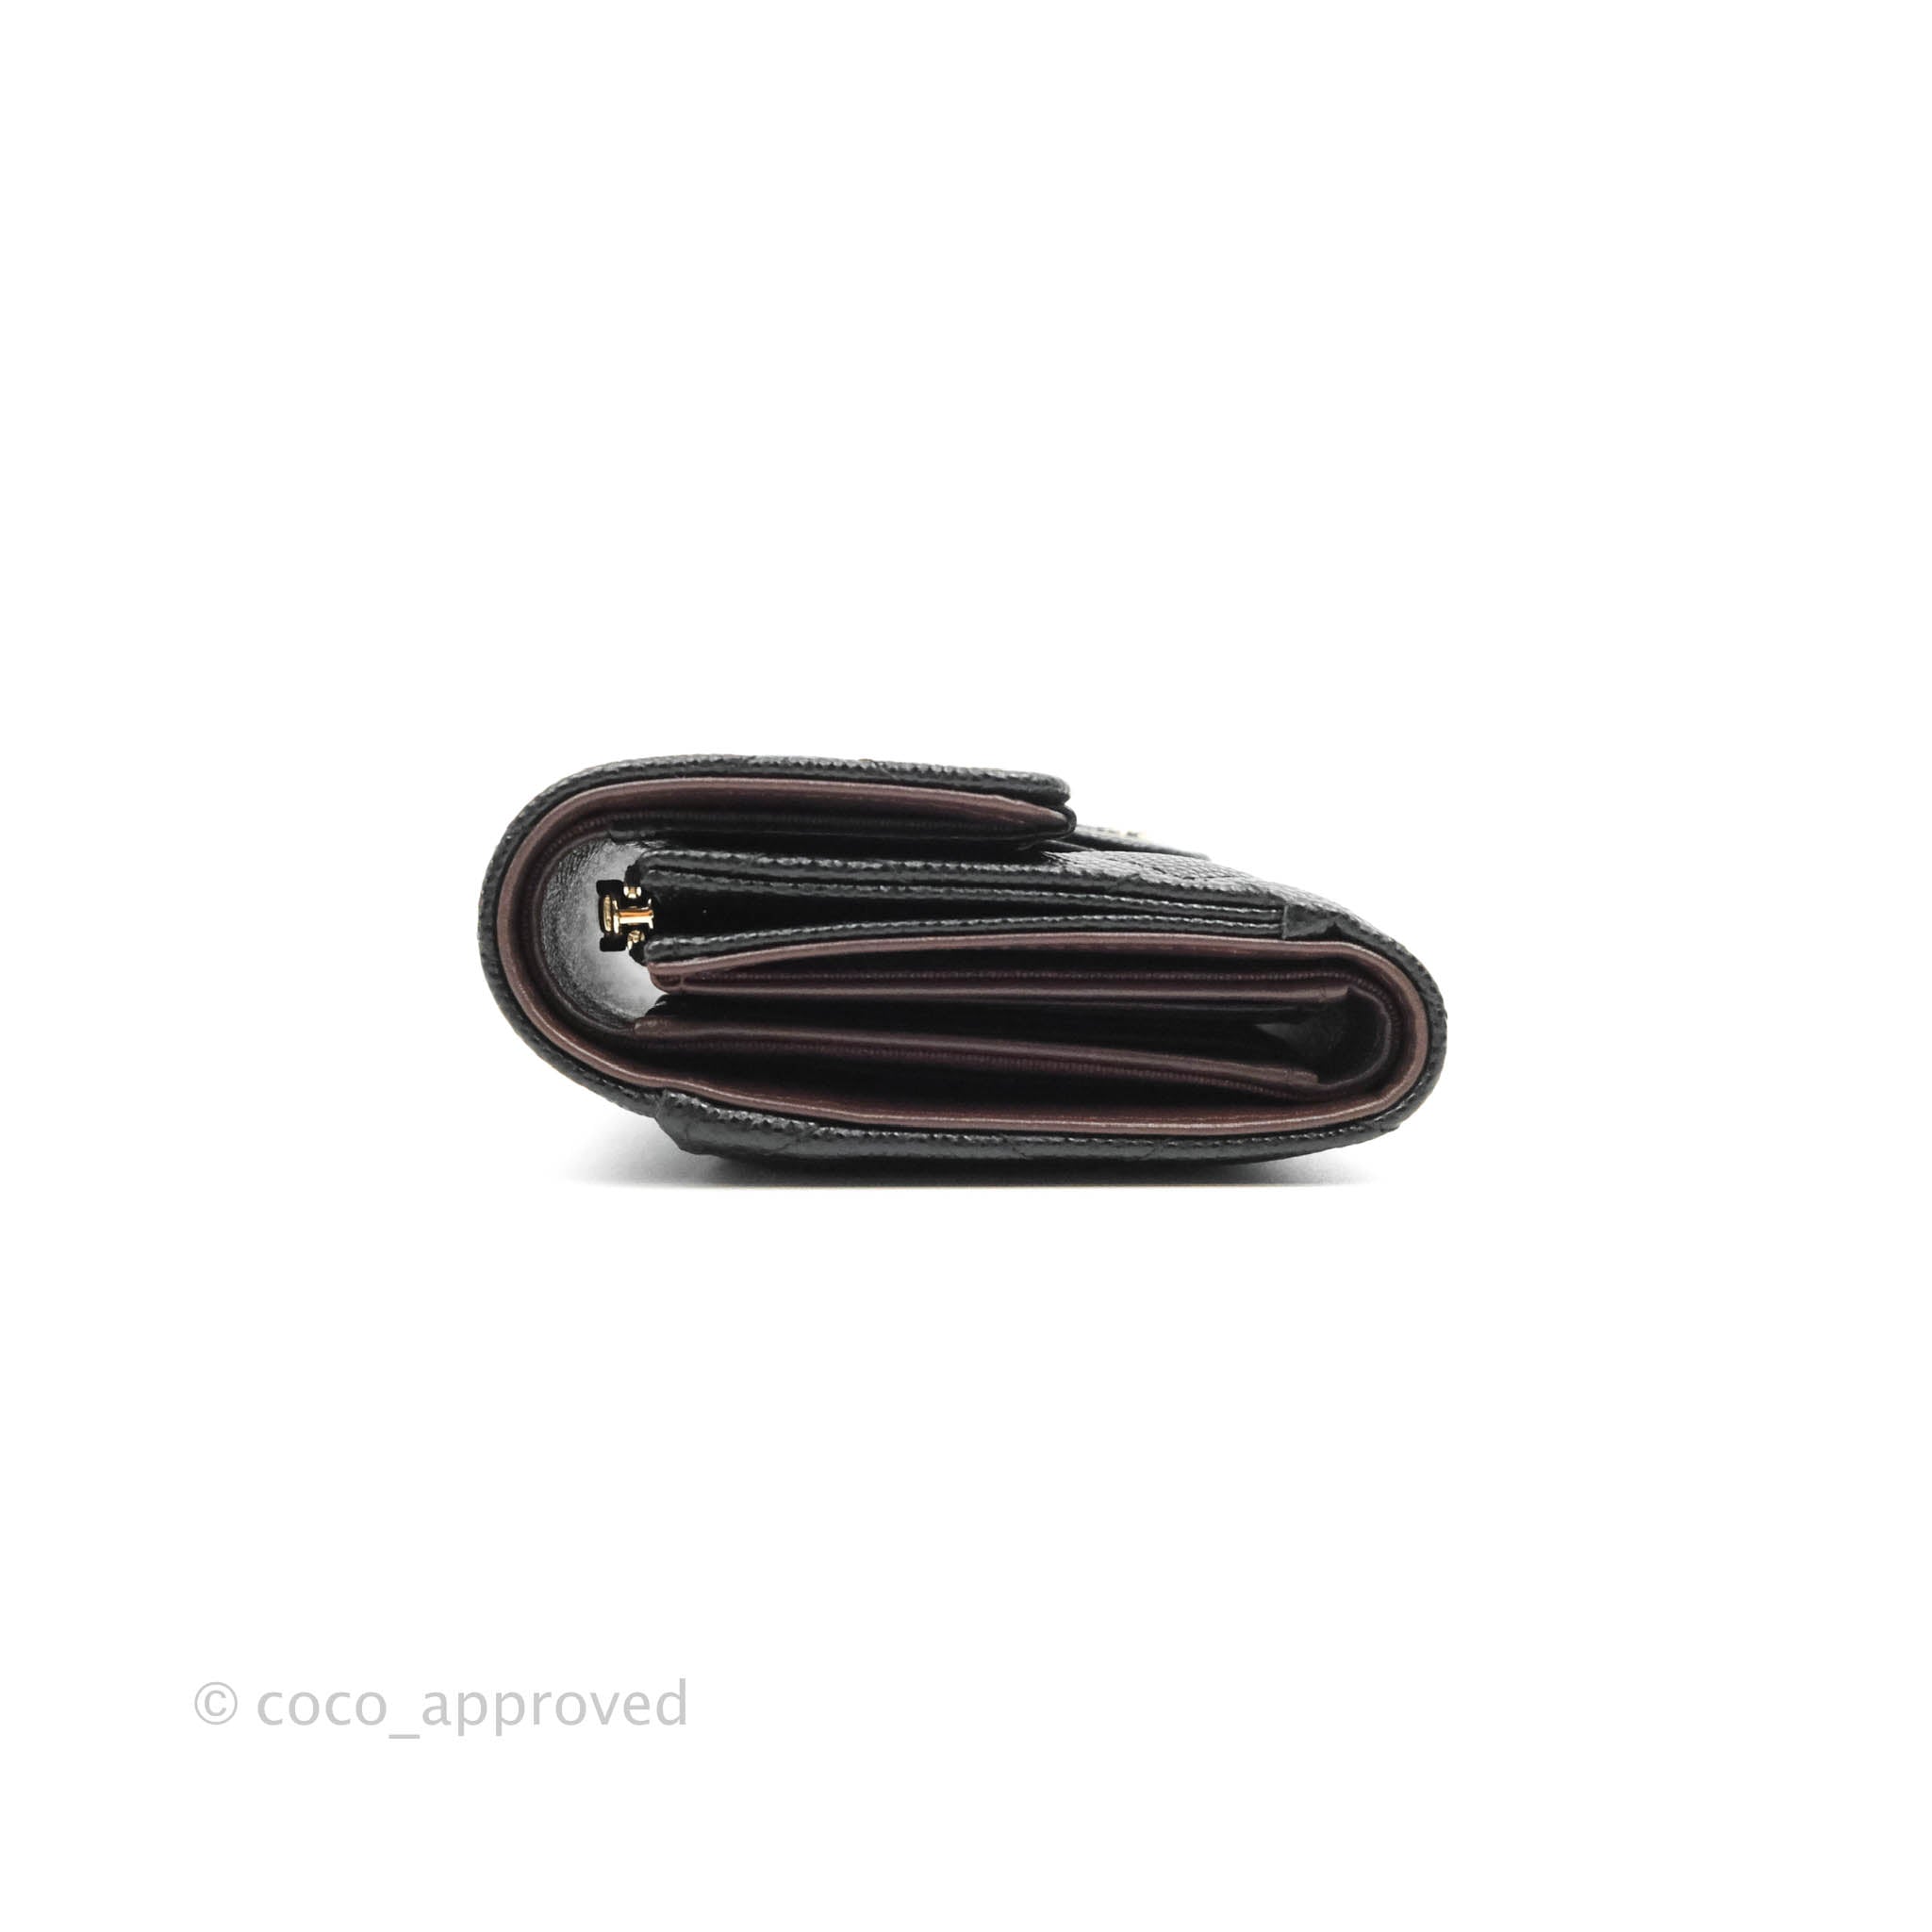 chanel mini black caviar wallet